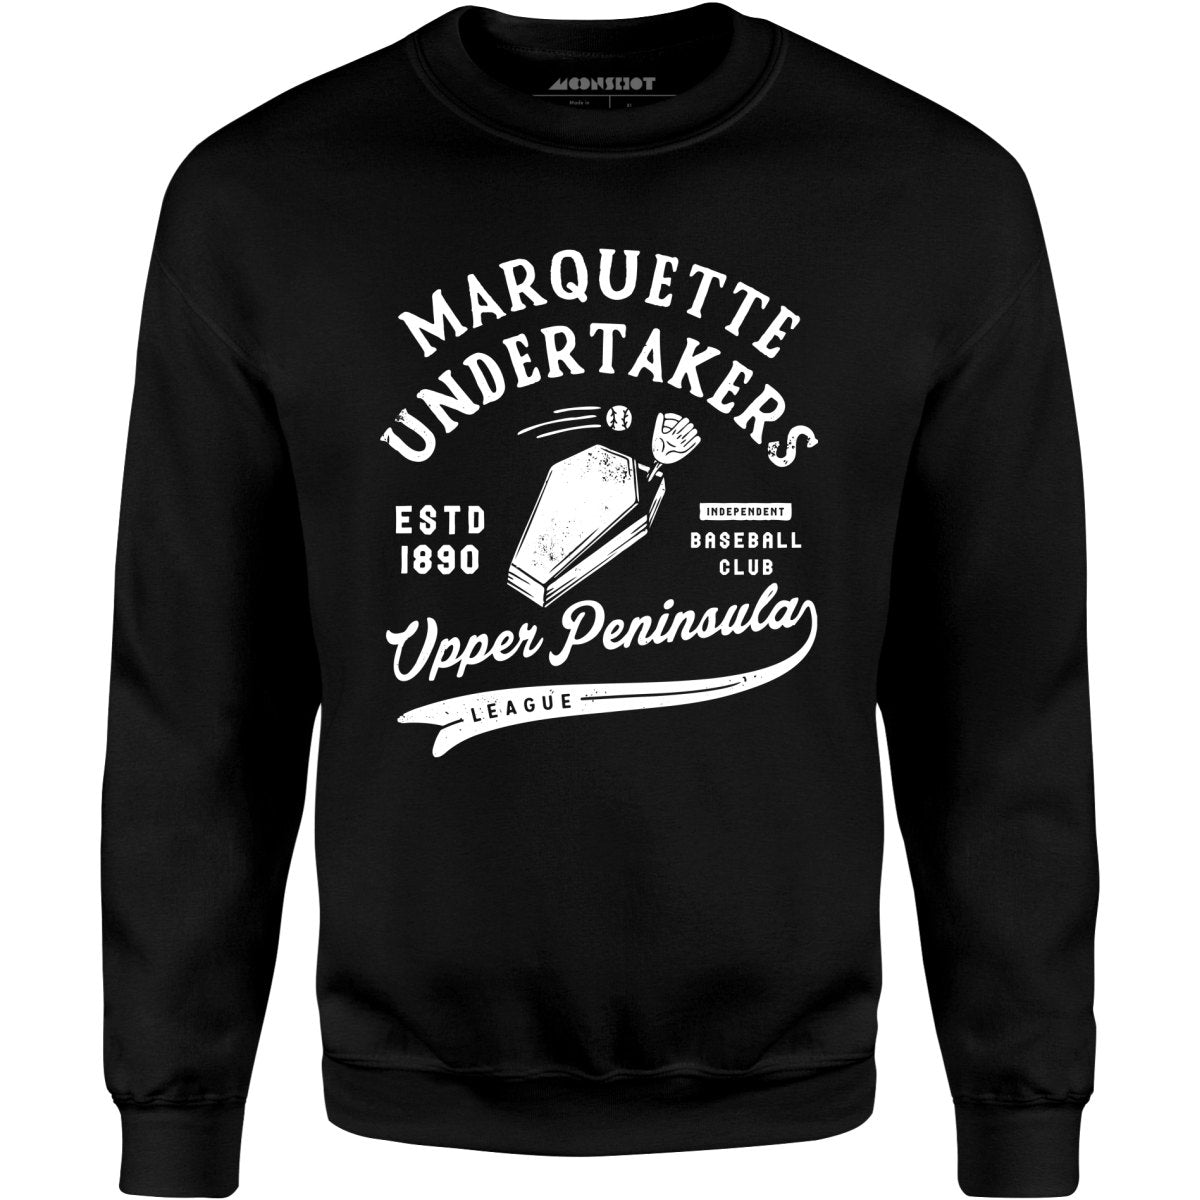 Marquette Undertakers - Michigan - Vintage Defunct Baseball Teams - Unisex Sweatshirt